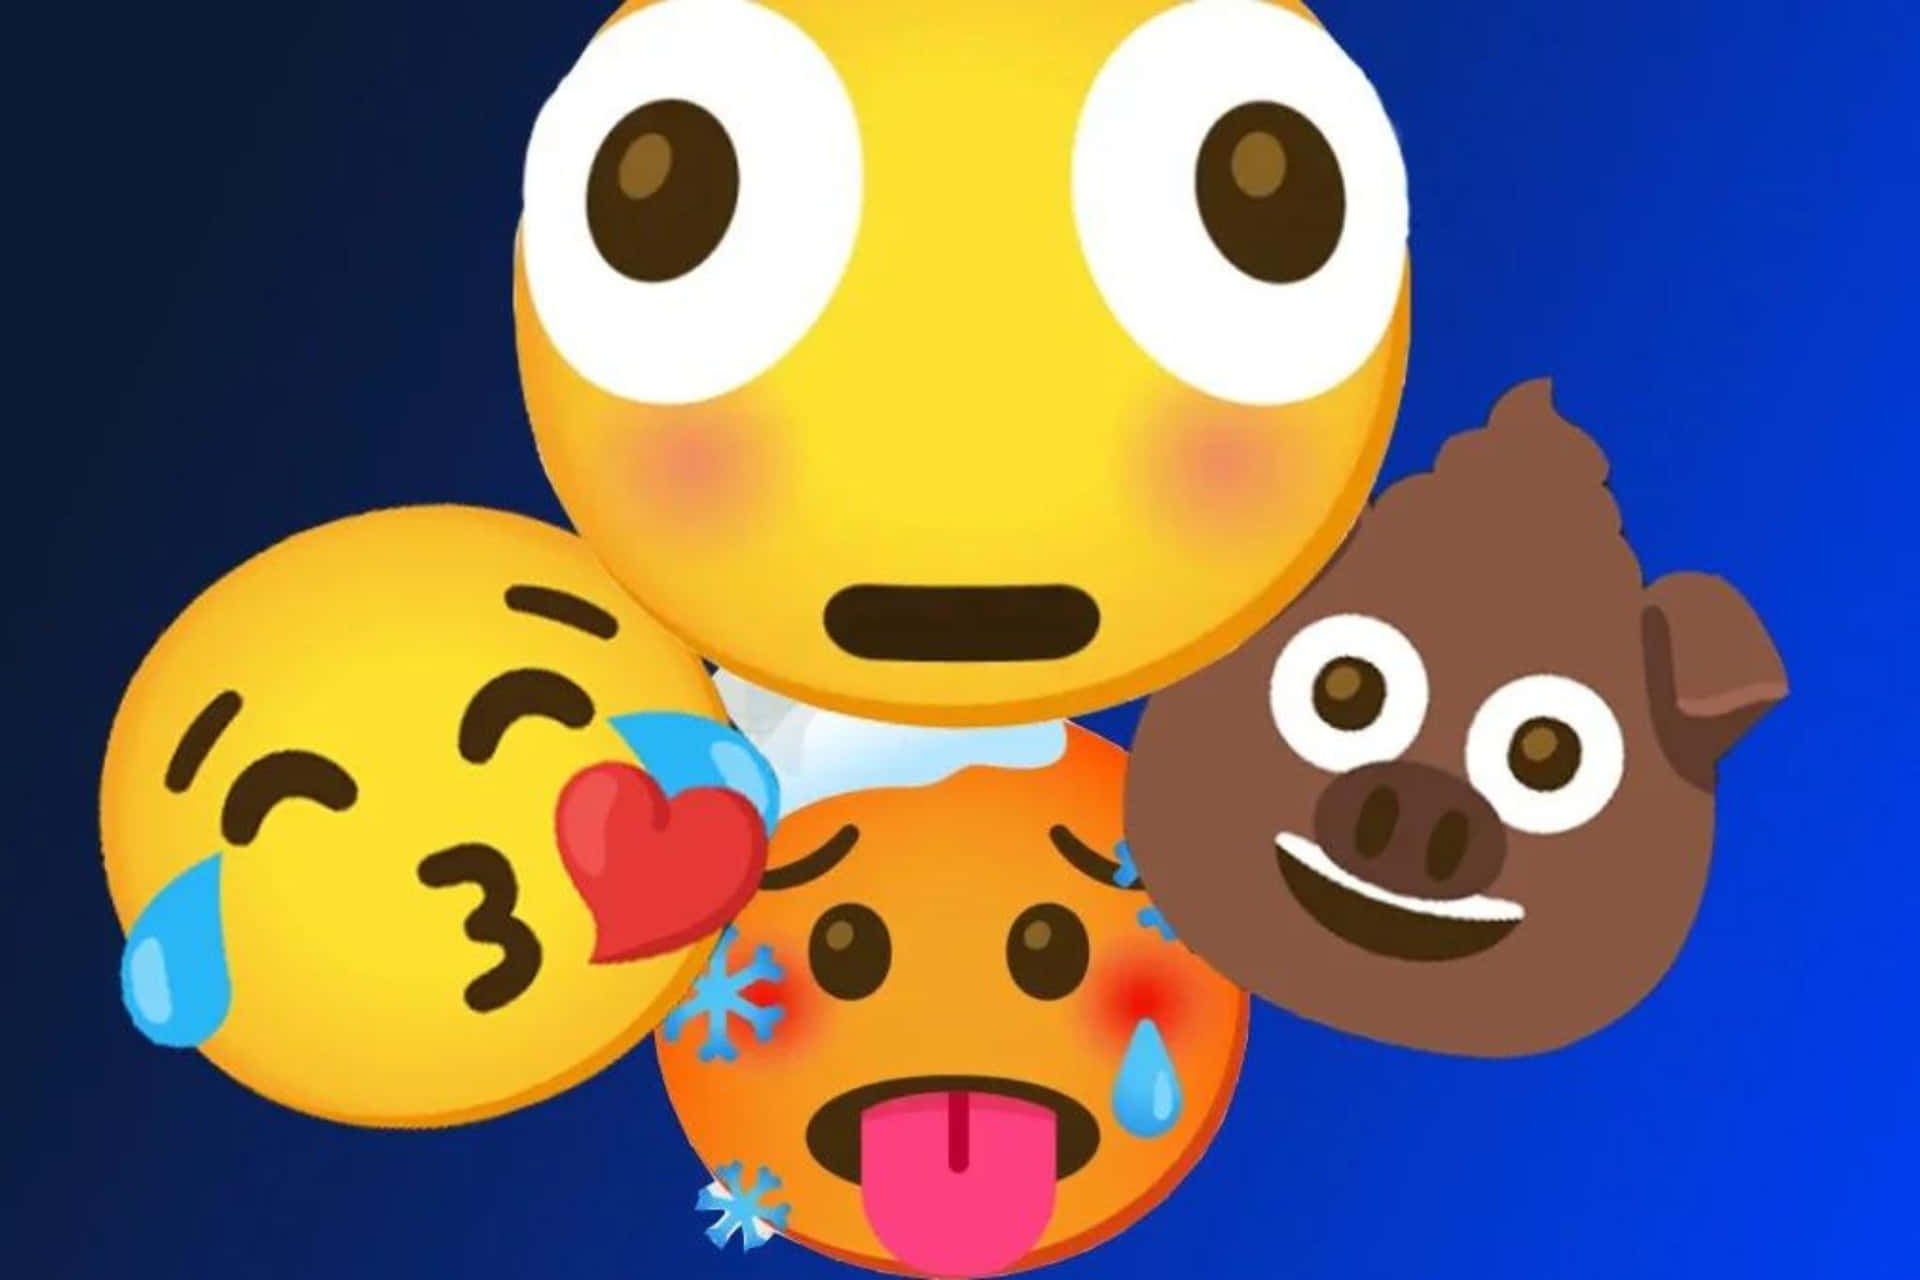 Assorted Funny Emoji Expressions Wallpaper